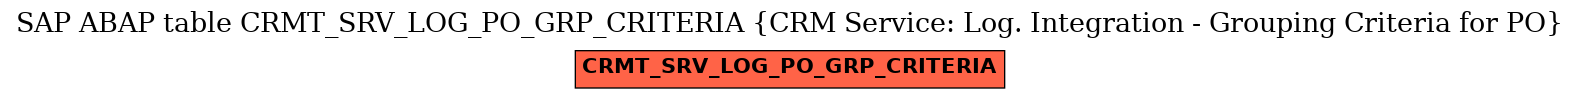 E-R Diagram for table CRMT_SRV_LOG_PO_GRP_CRITERIA (CRM Service: Log. Integration - Grouping Criteria for PO)